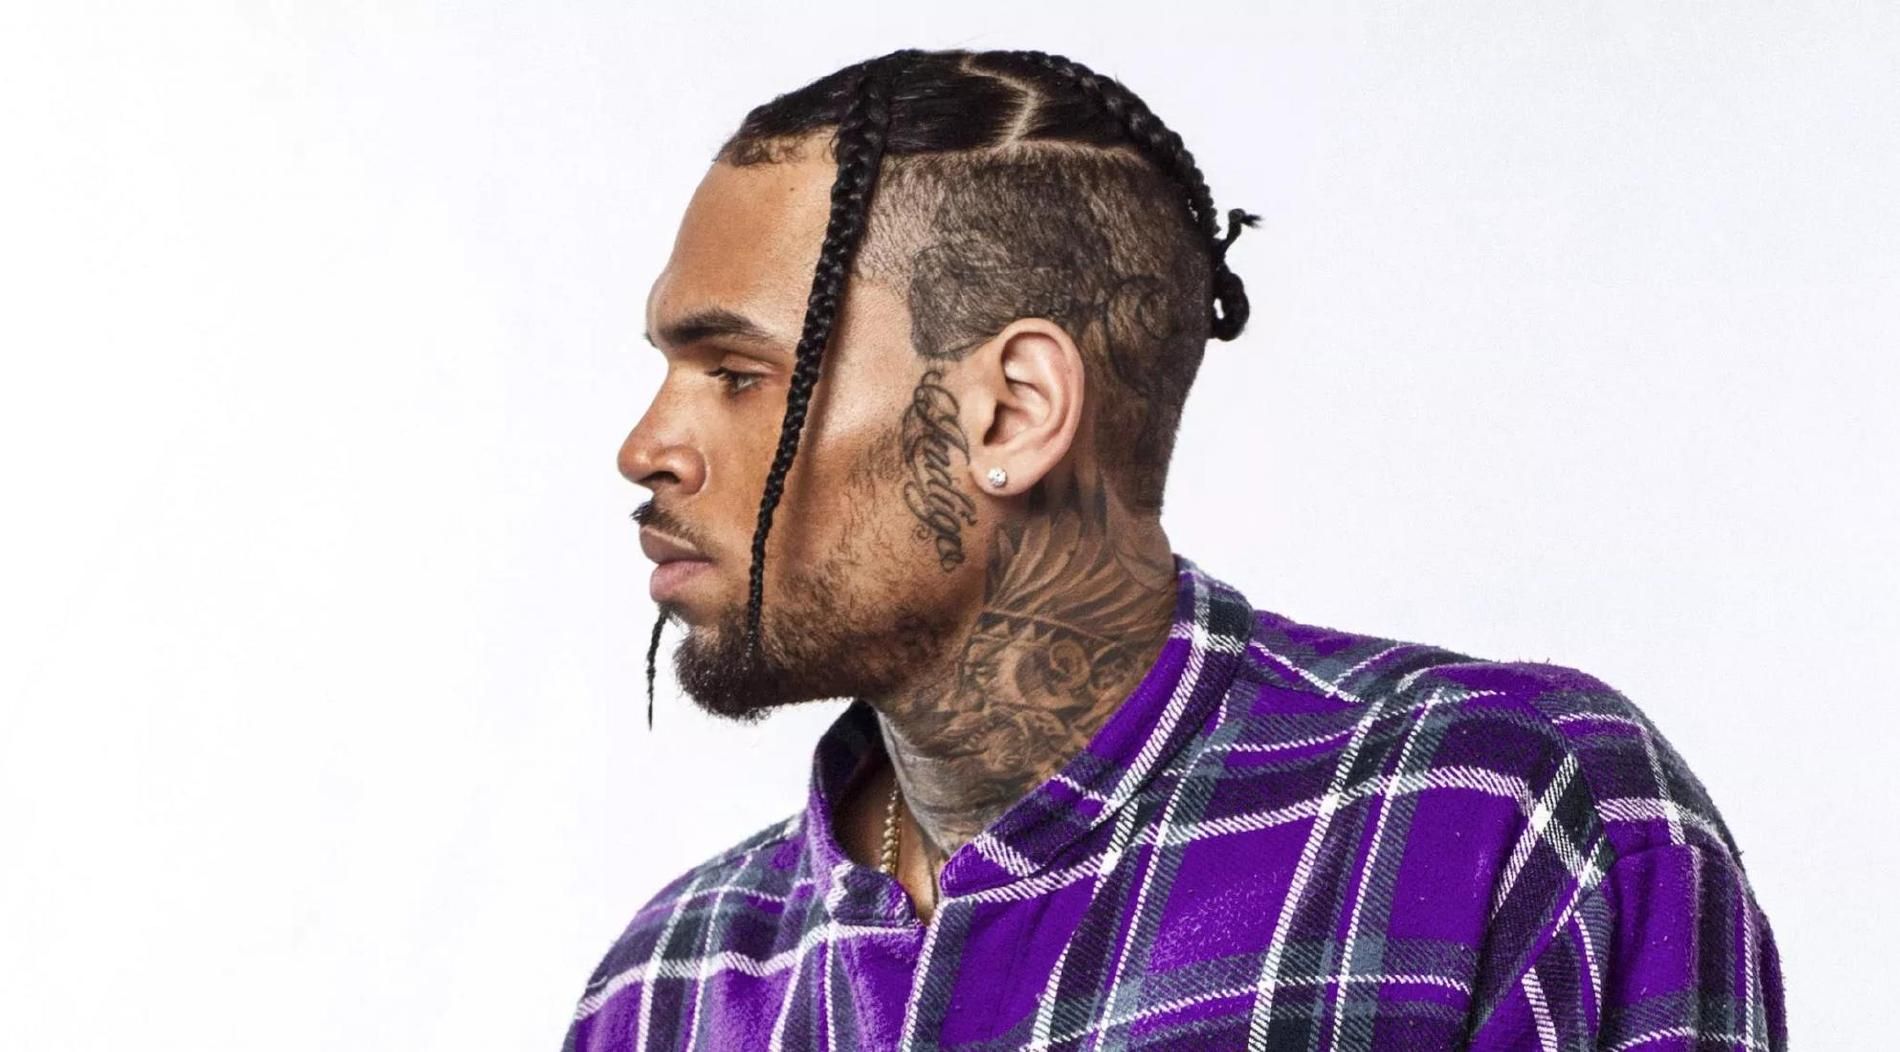 LOOK AT ME NOW - Chris Brown - LETRAS.COM